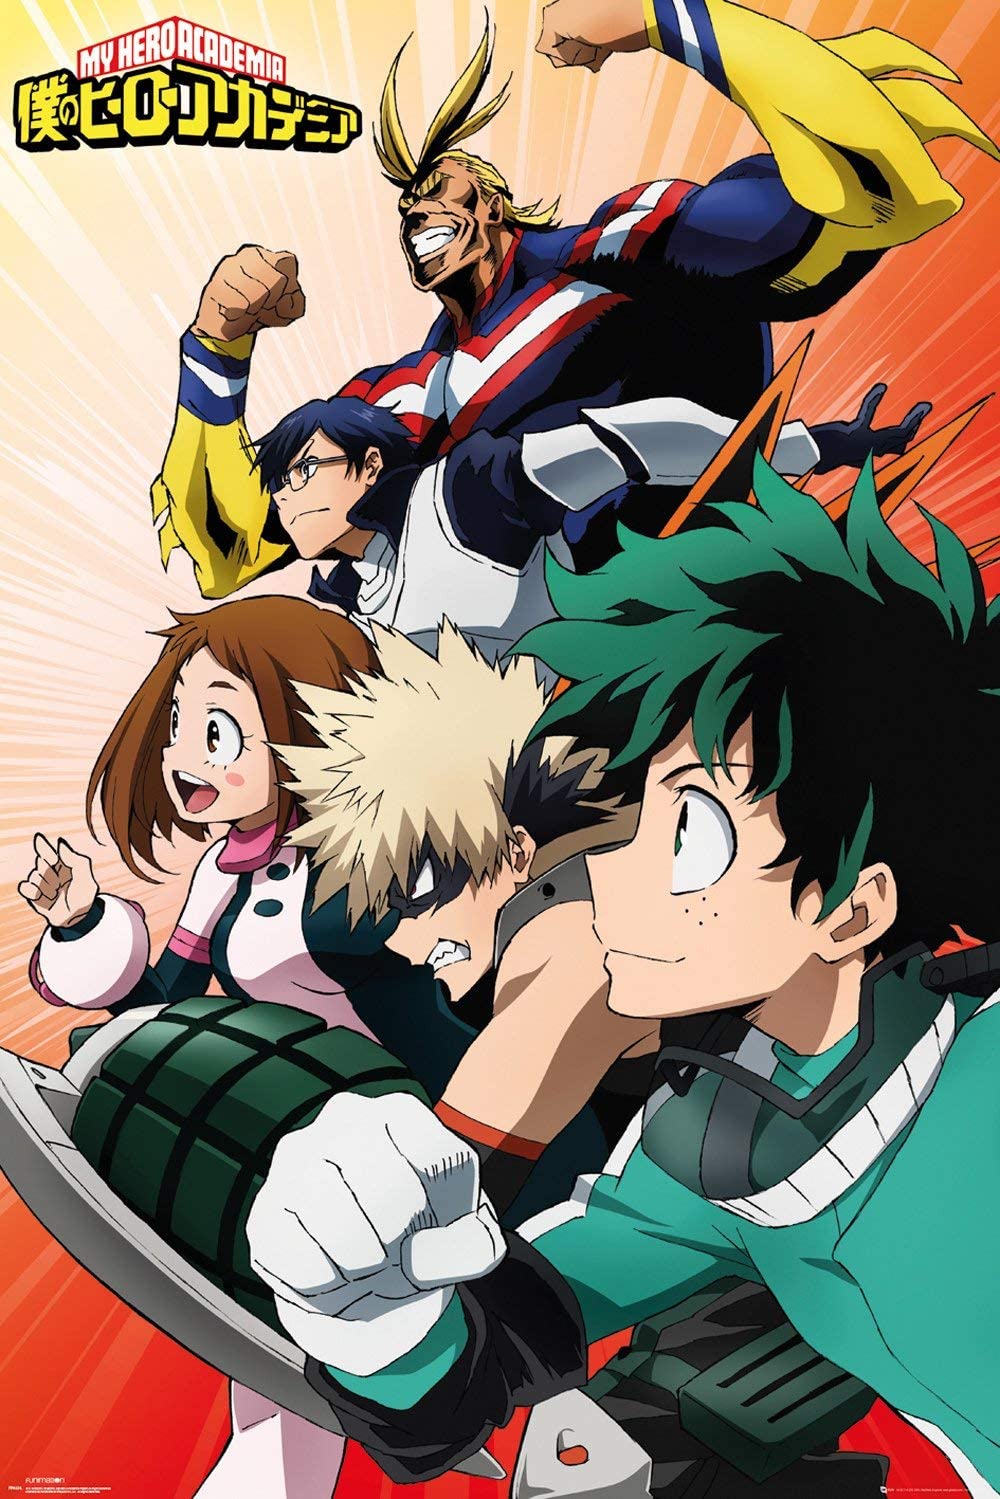 POSTER STOP ONLINE My Hero Academia - Manga Anime TV Show Poster (Cobalt  Blast Group) (Size 24 x 36)